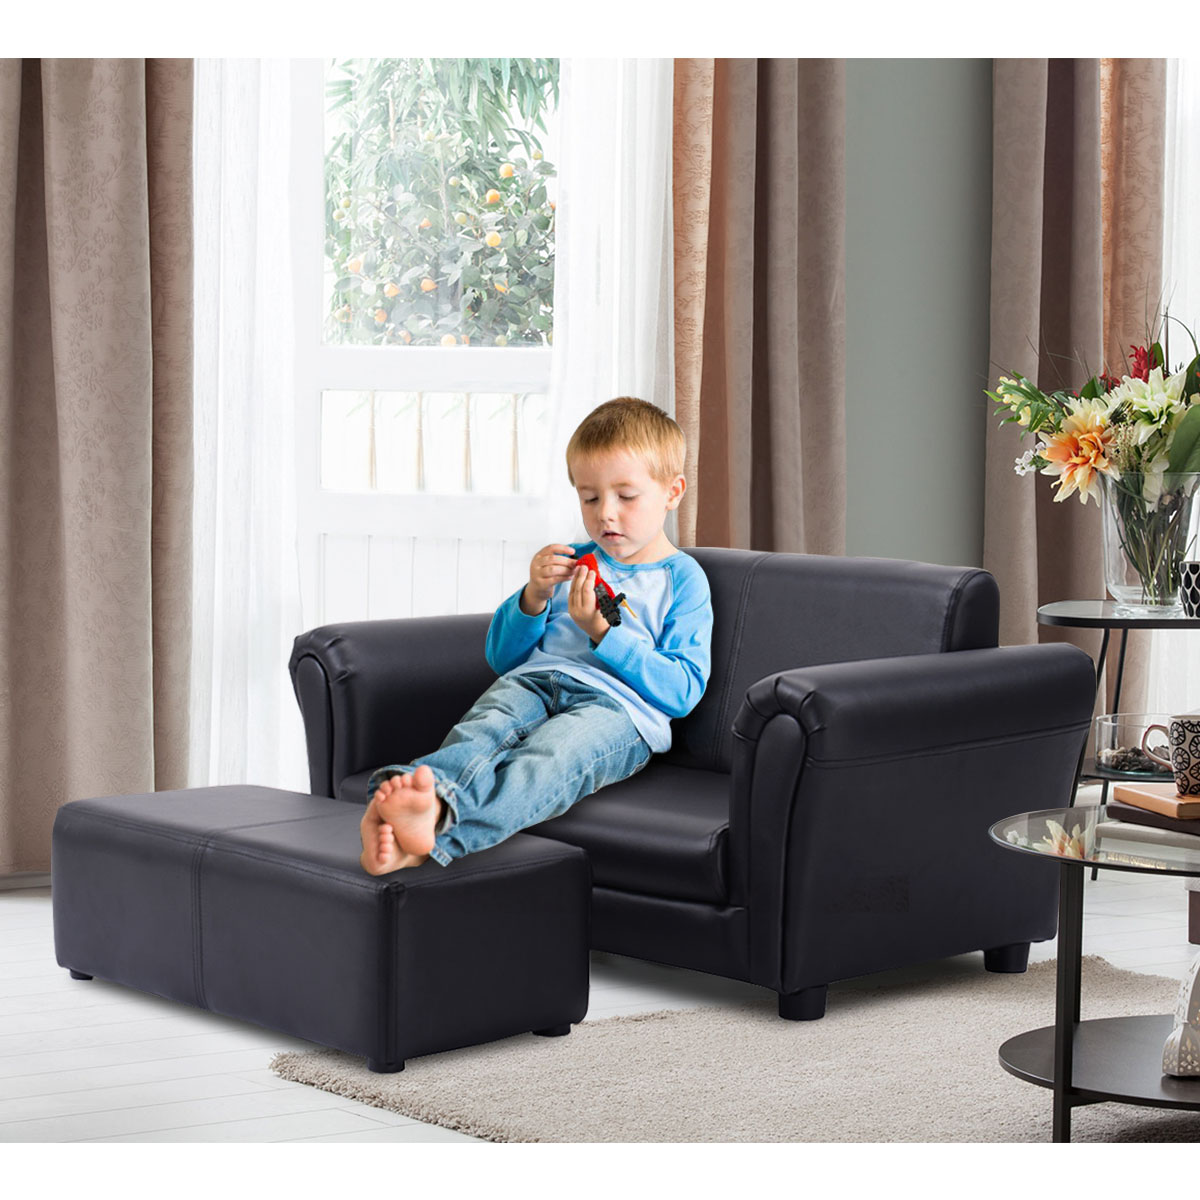 Topbuy Kids Sofa Upholstered Lounge Children Couch Ottoman w/ Armrest Black